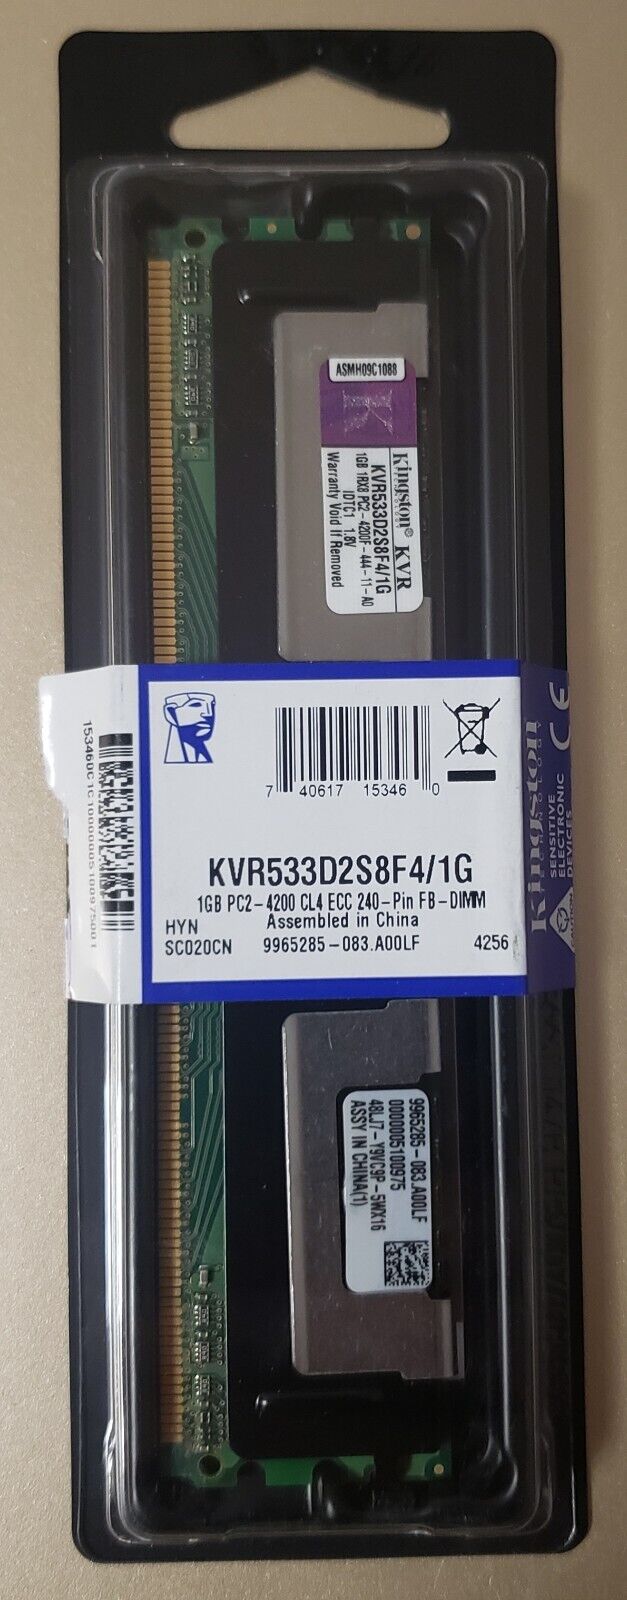 (Pack of 20) KVR533D2S8F4/1G - Kingston 1GB FB-DIMM 240-Pin Memory Module